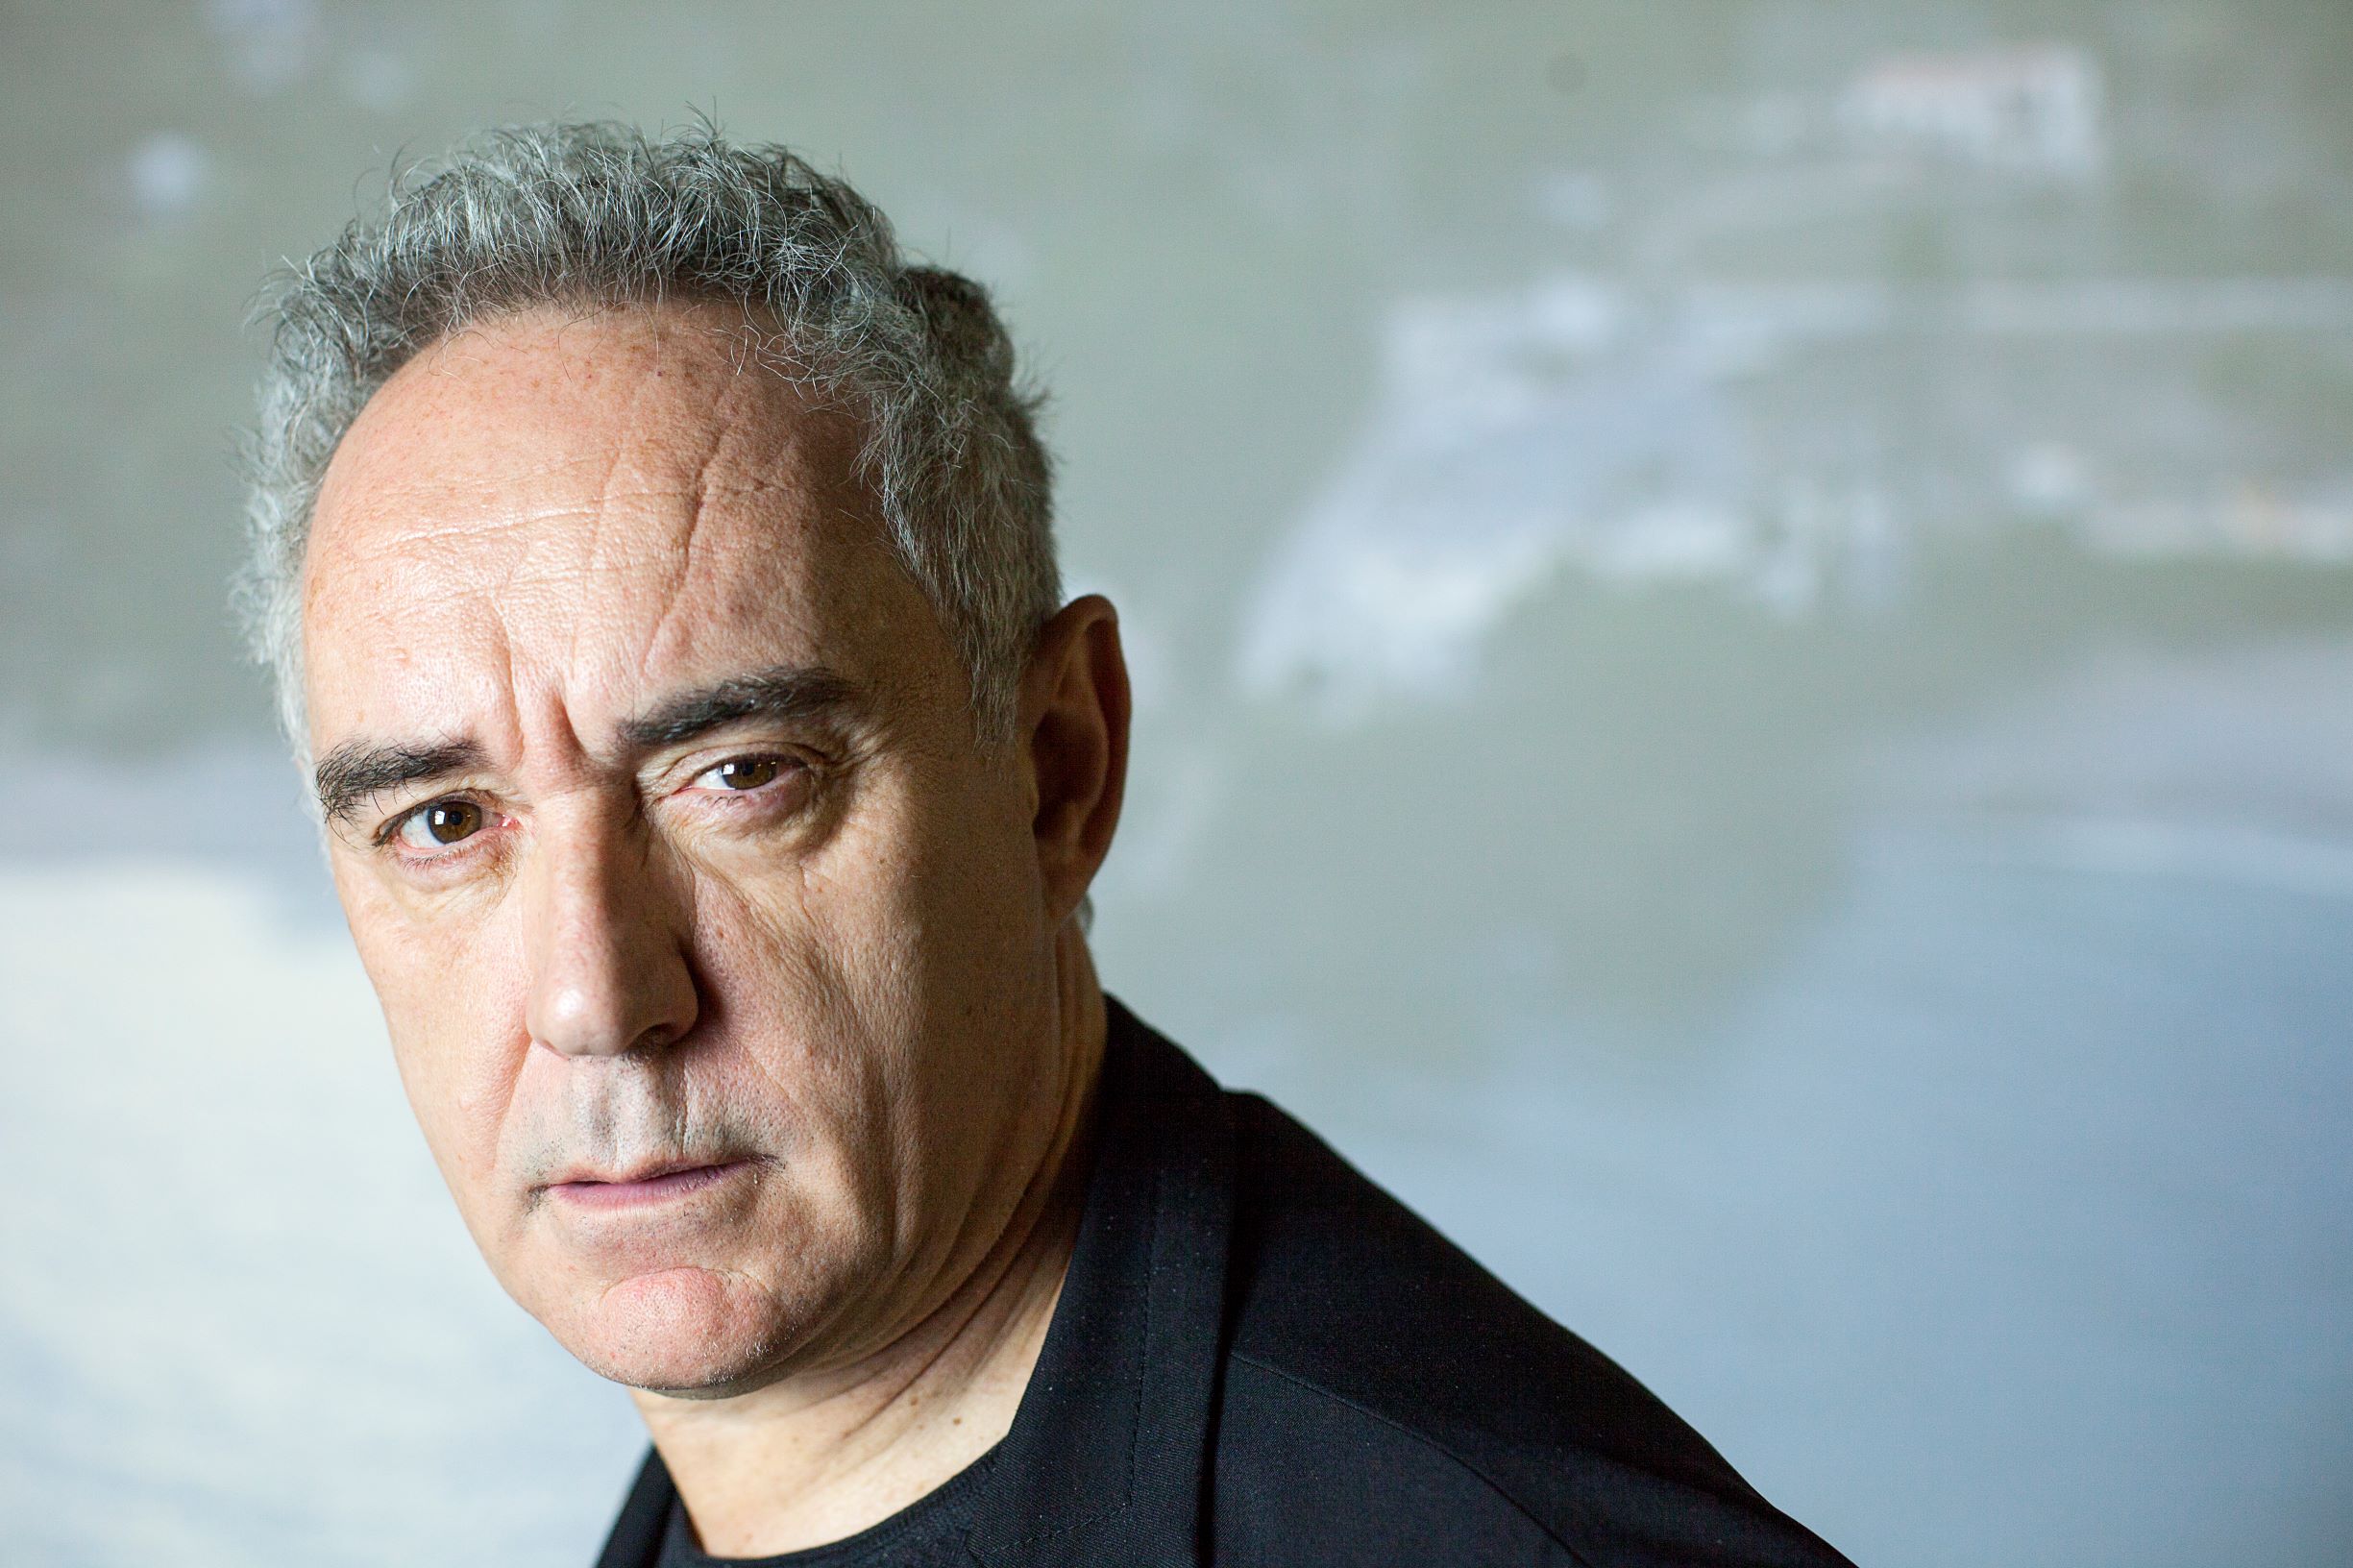 Ferran Adrià. Photograph by Juanjo Everman